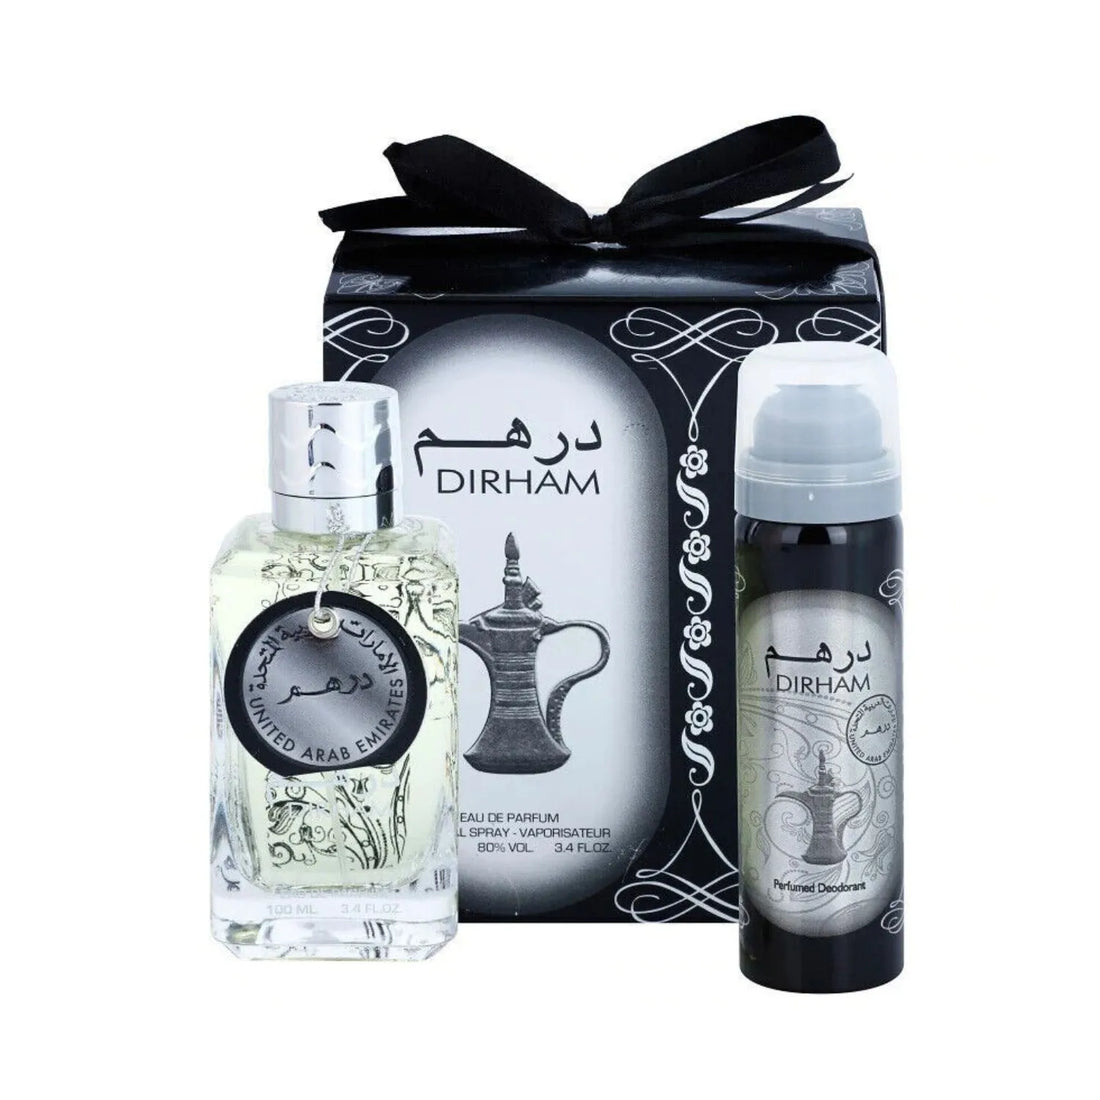 Dirham Silver Perfume Spray 100ml + Deodorant body spray 50ml Combo (U)